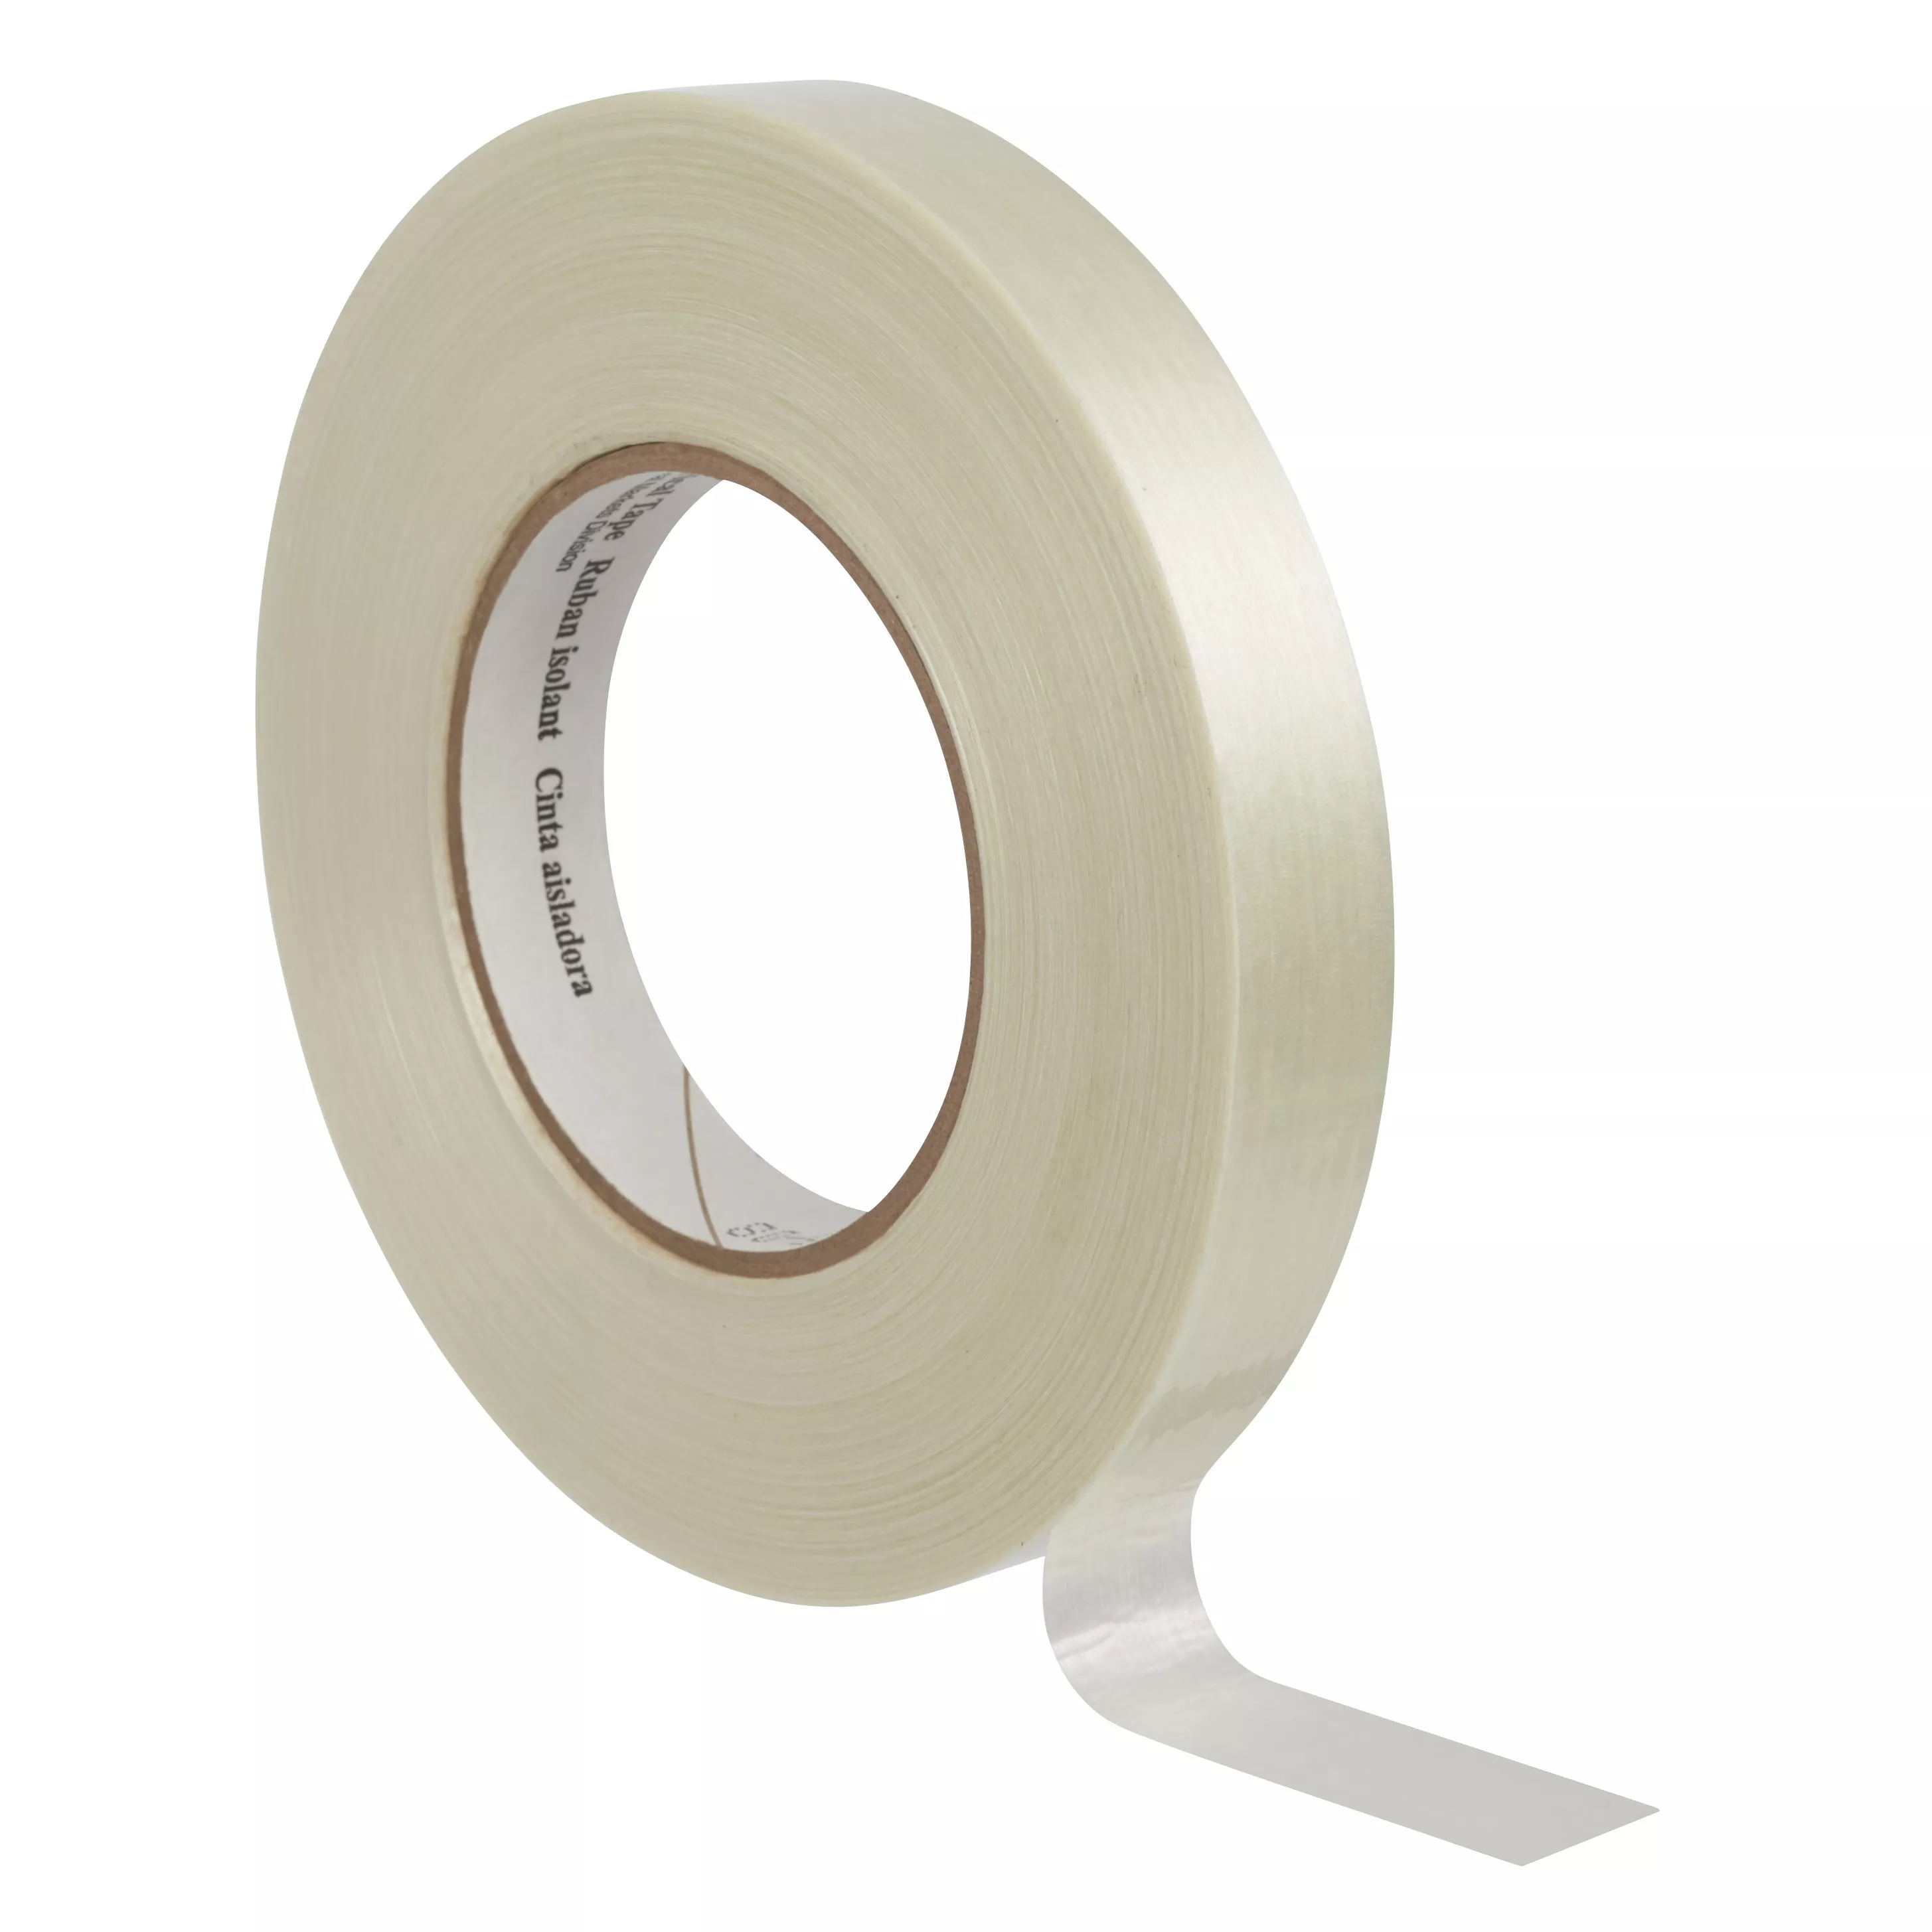 3M™ Filament-Reinforced Electrical Tape 45, 19 mm x 20 m, Box of 20
rolls, 20 Rolls/Case